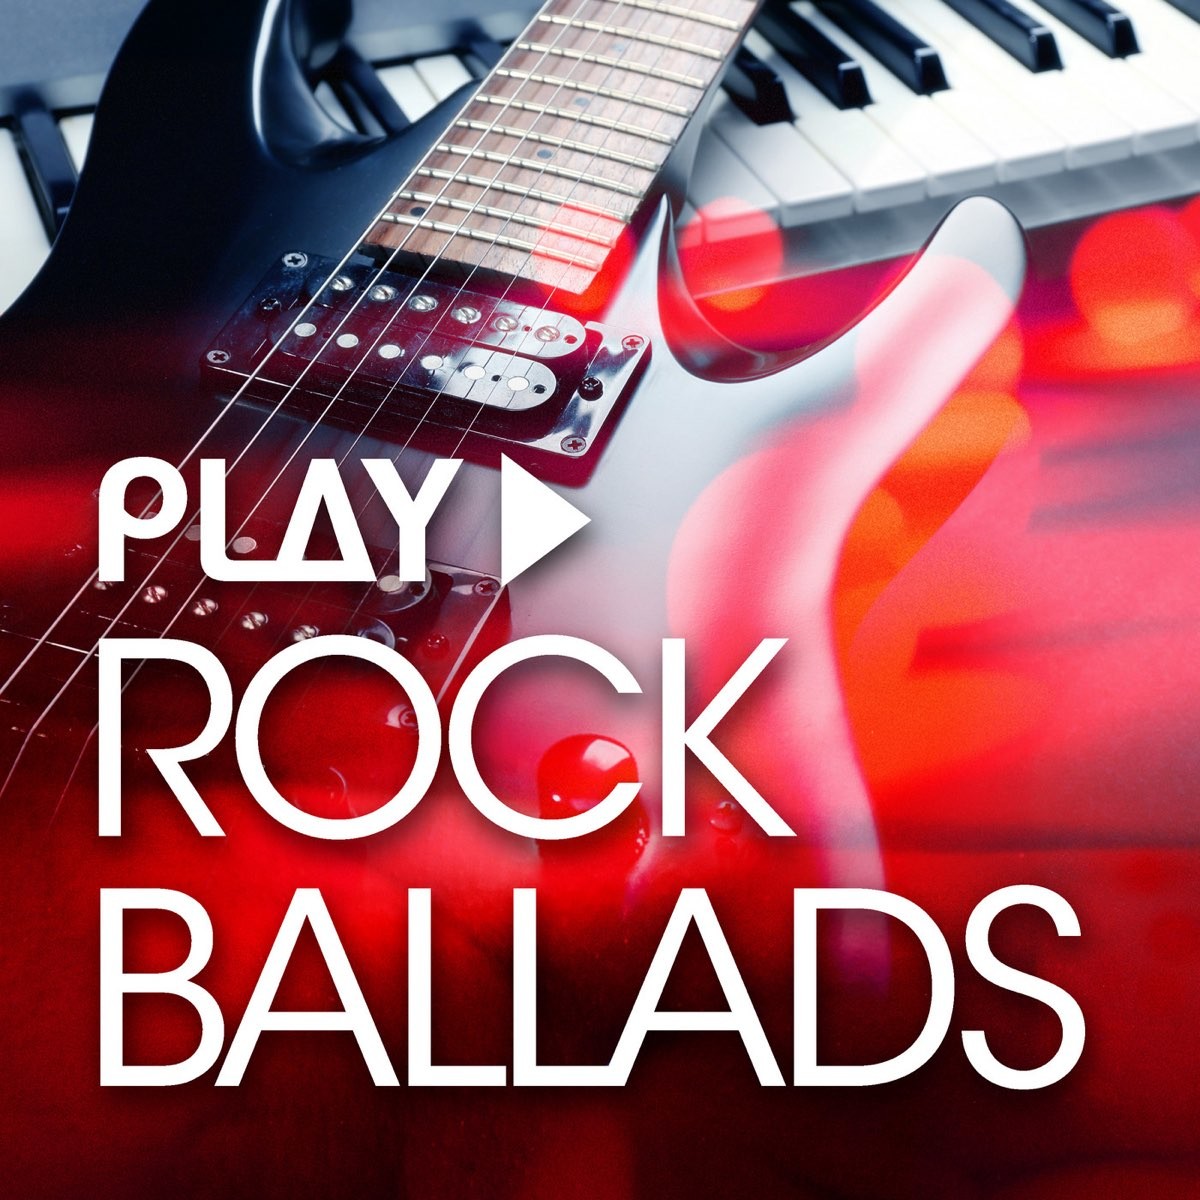 Play rock 2. Rock Ballads. Rock баллады. Популярные рок баллады. Сборник рок баллад.